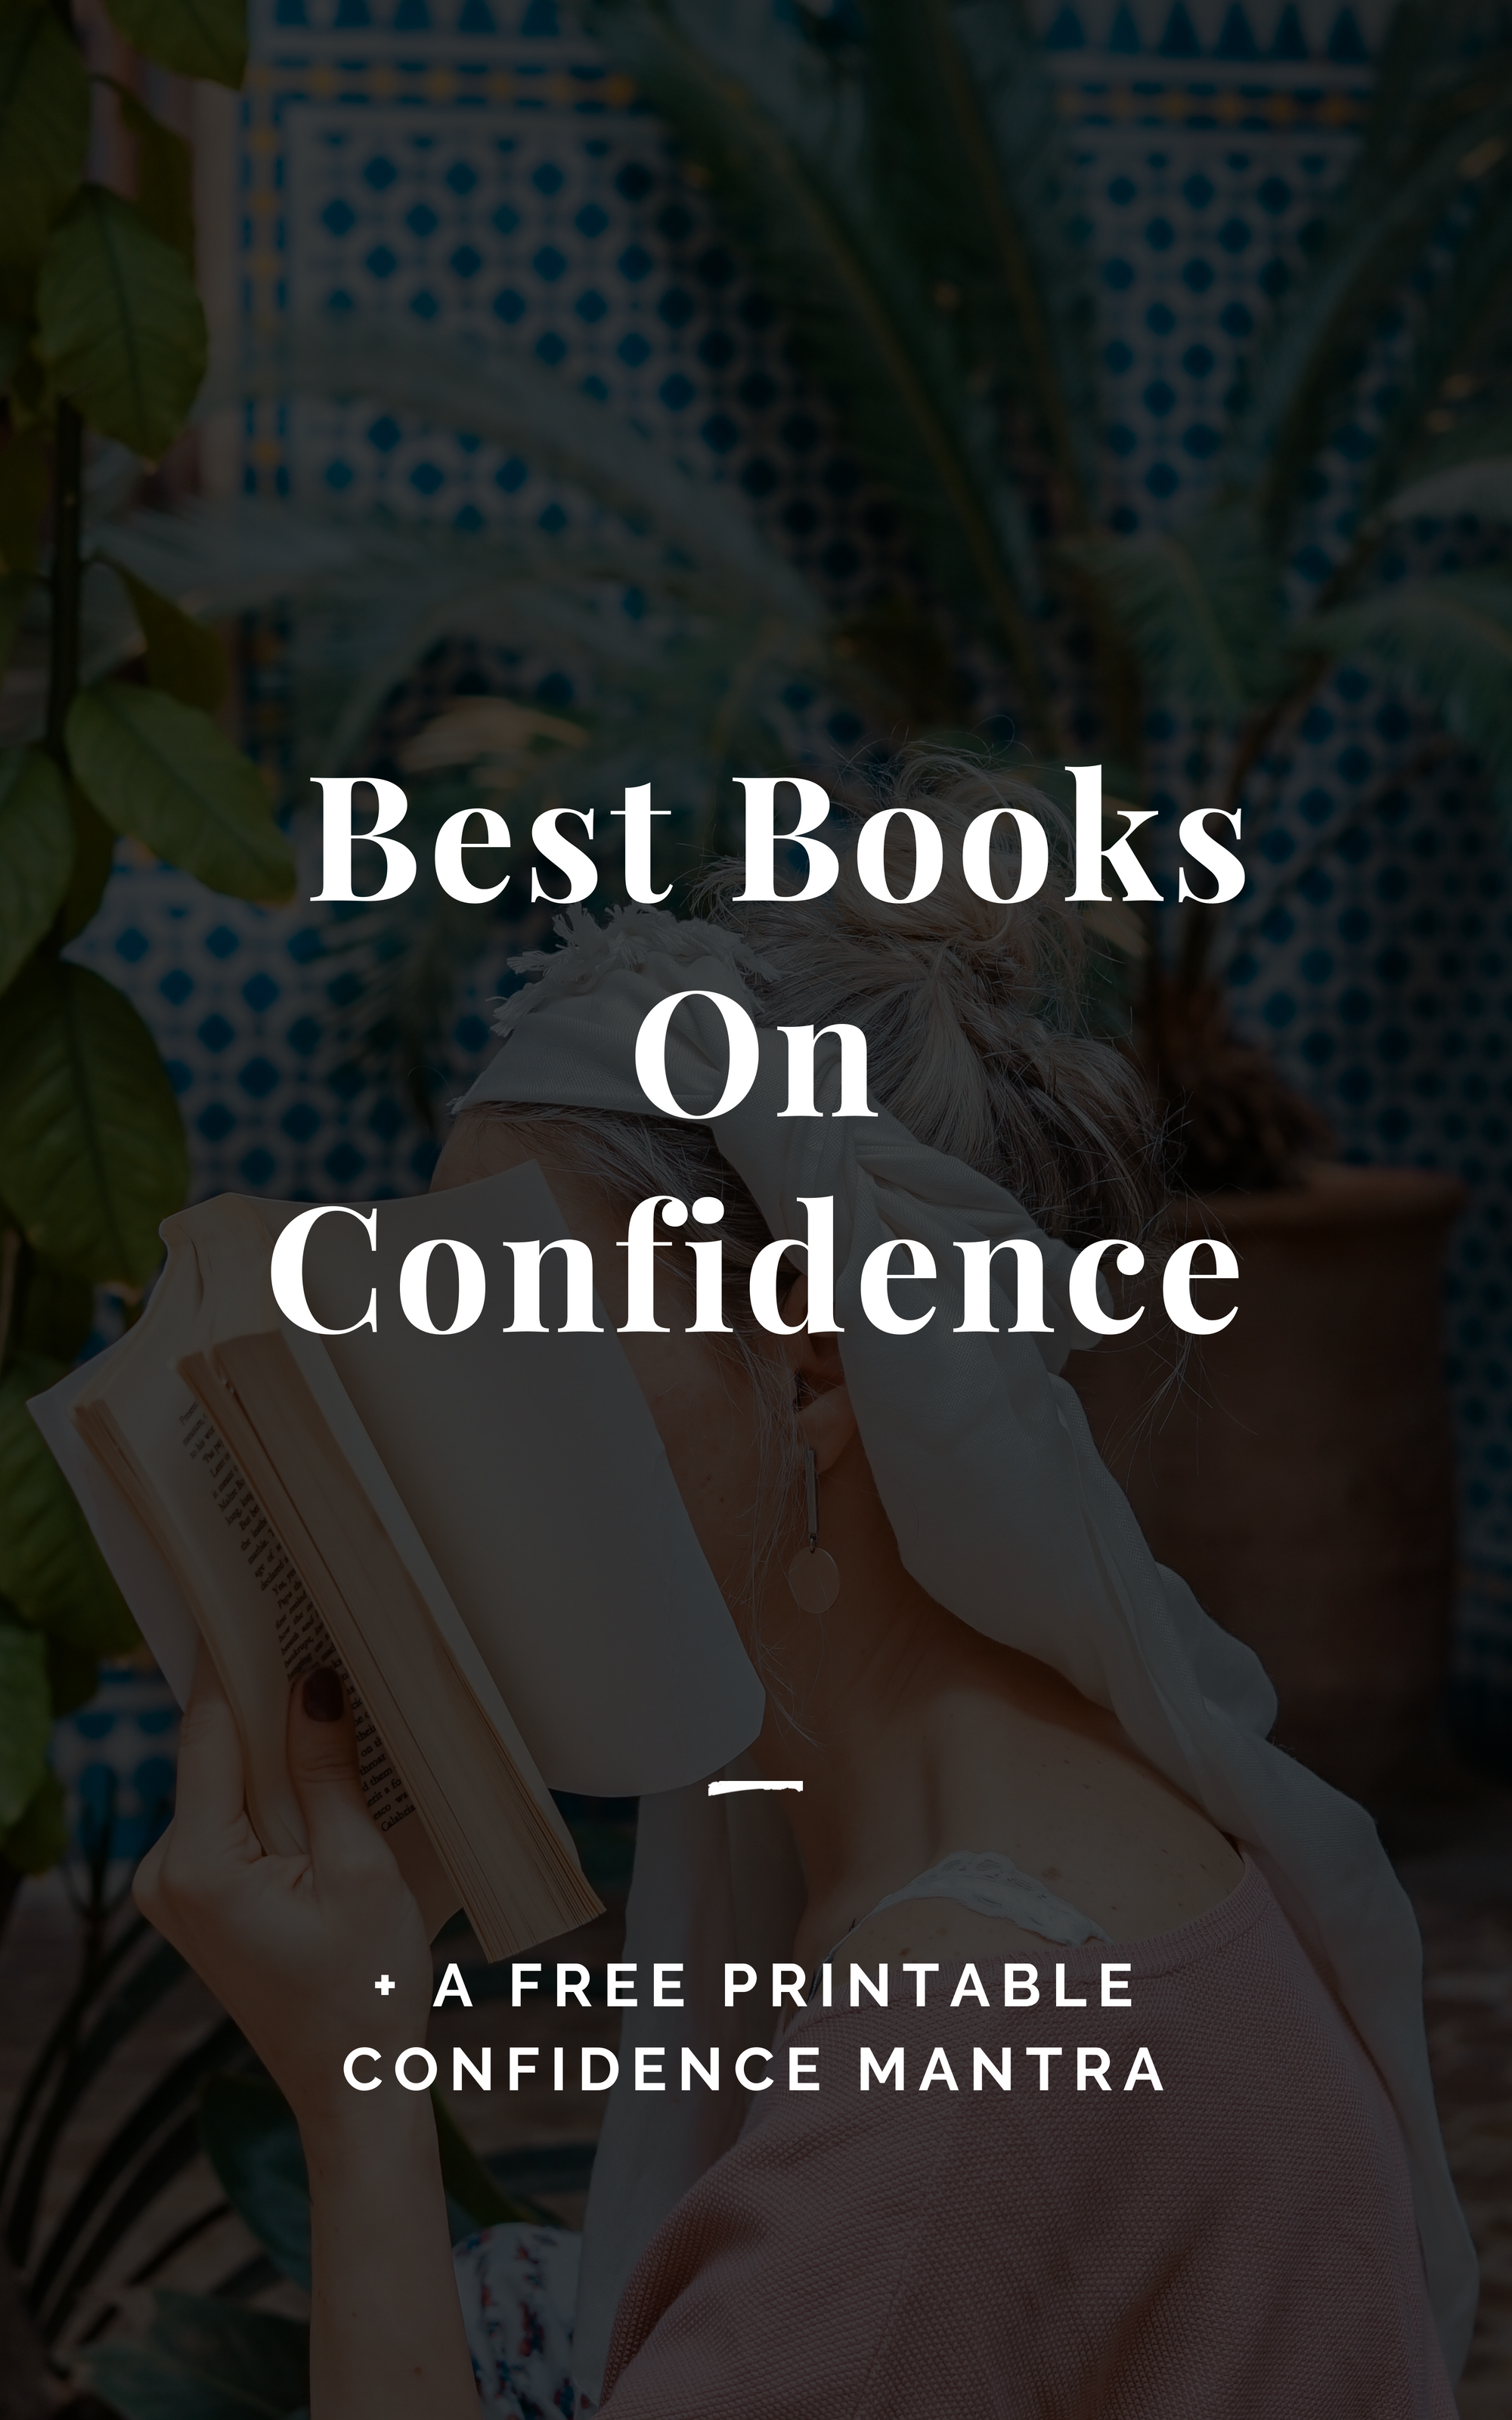 Best Books on Confidence